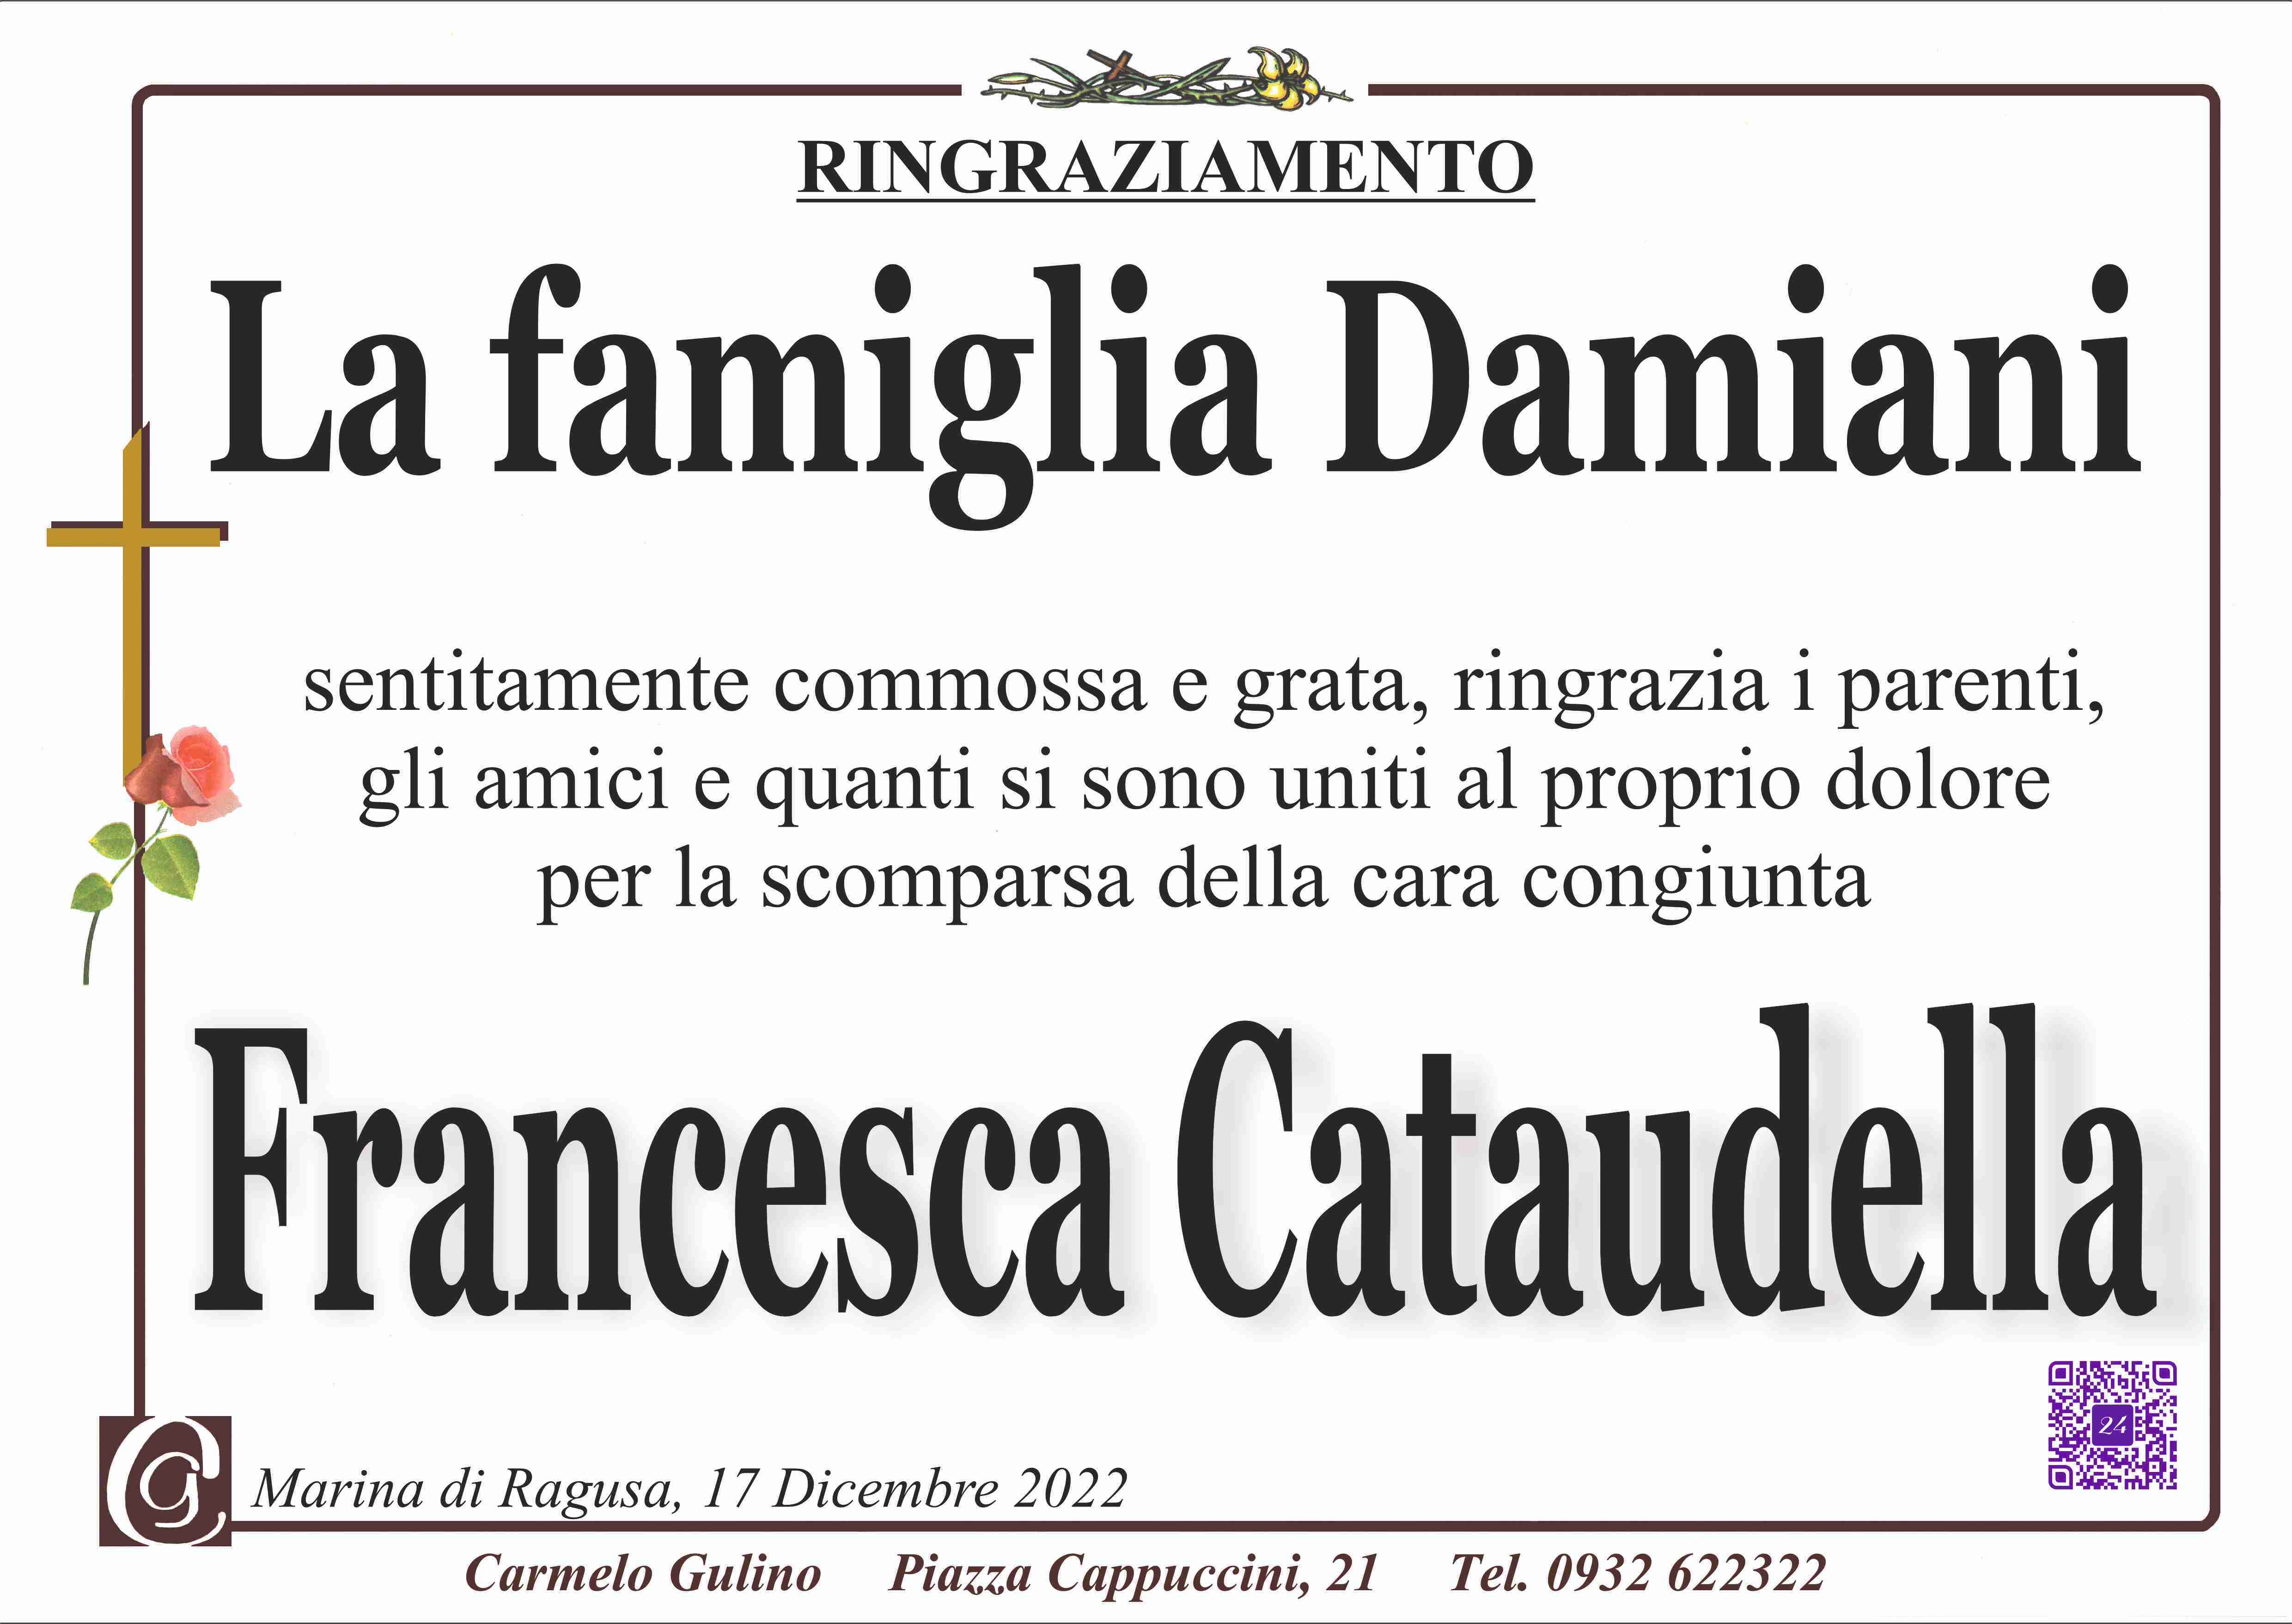 Francesca Cataudella